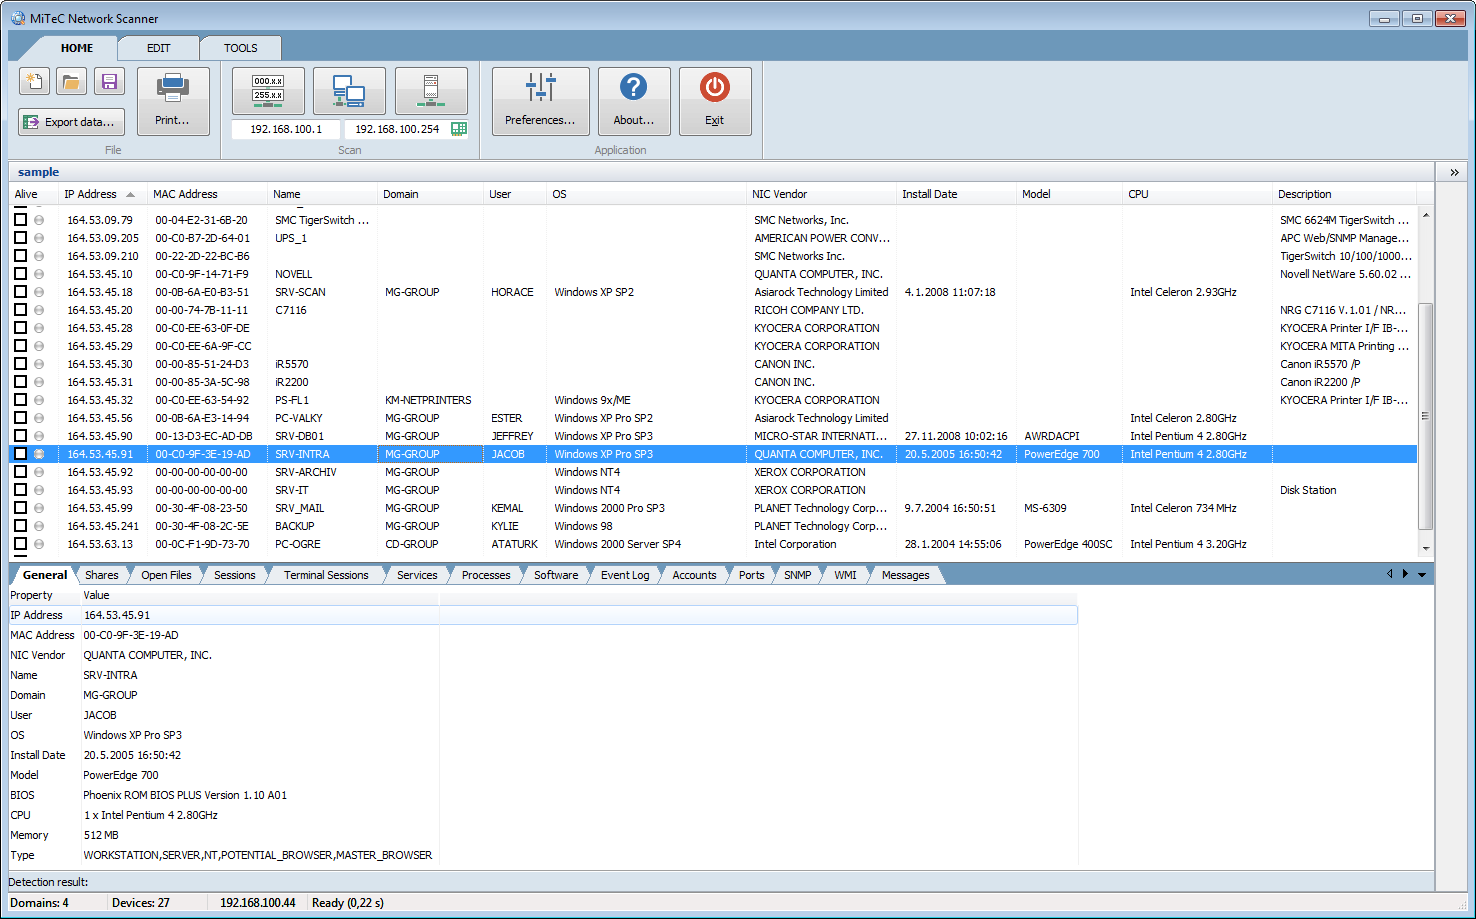 MiTeC EXE Explorer 3.6.5 for windows instal free